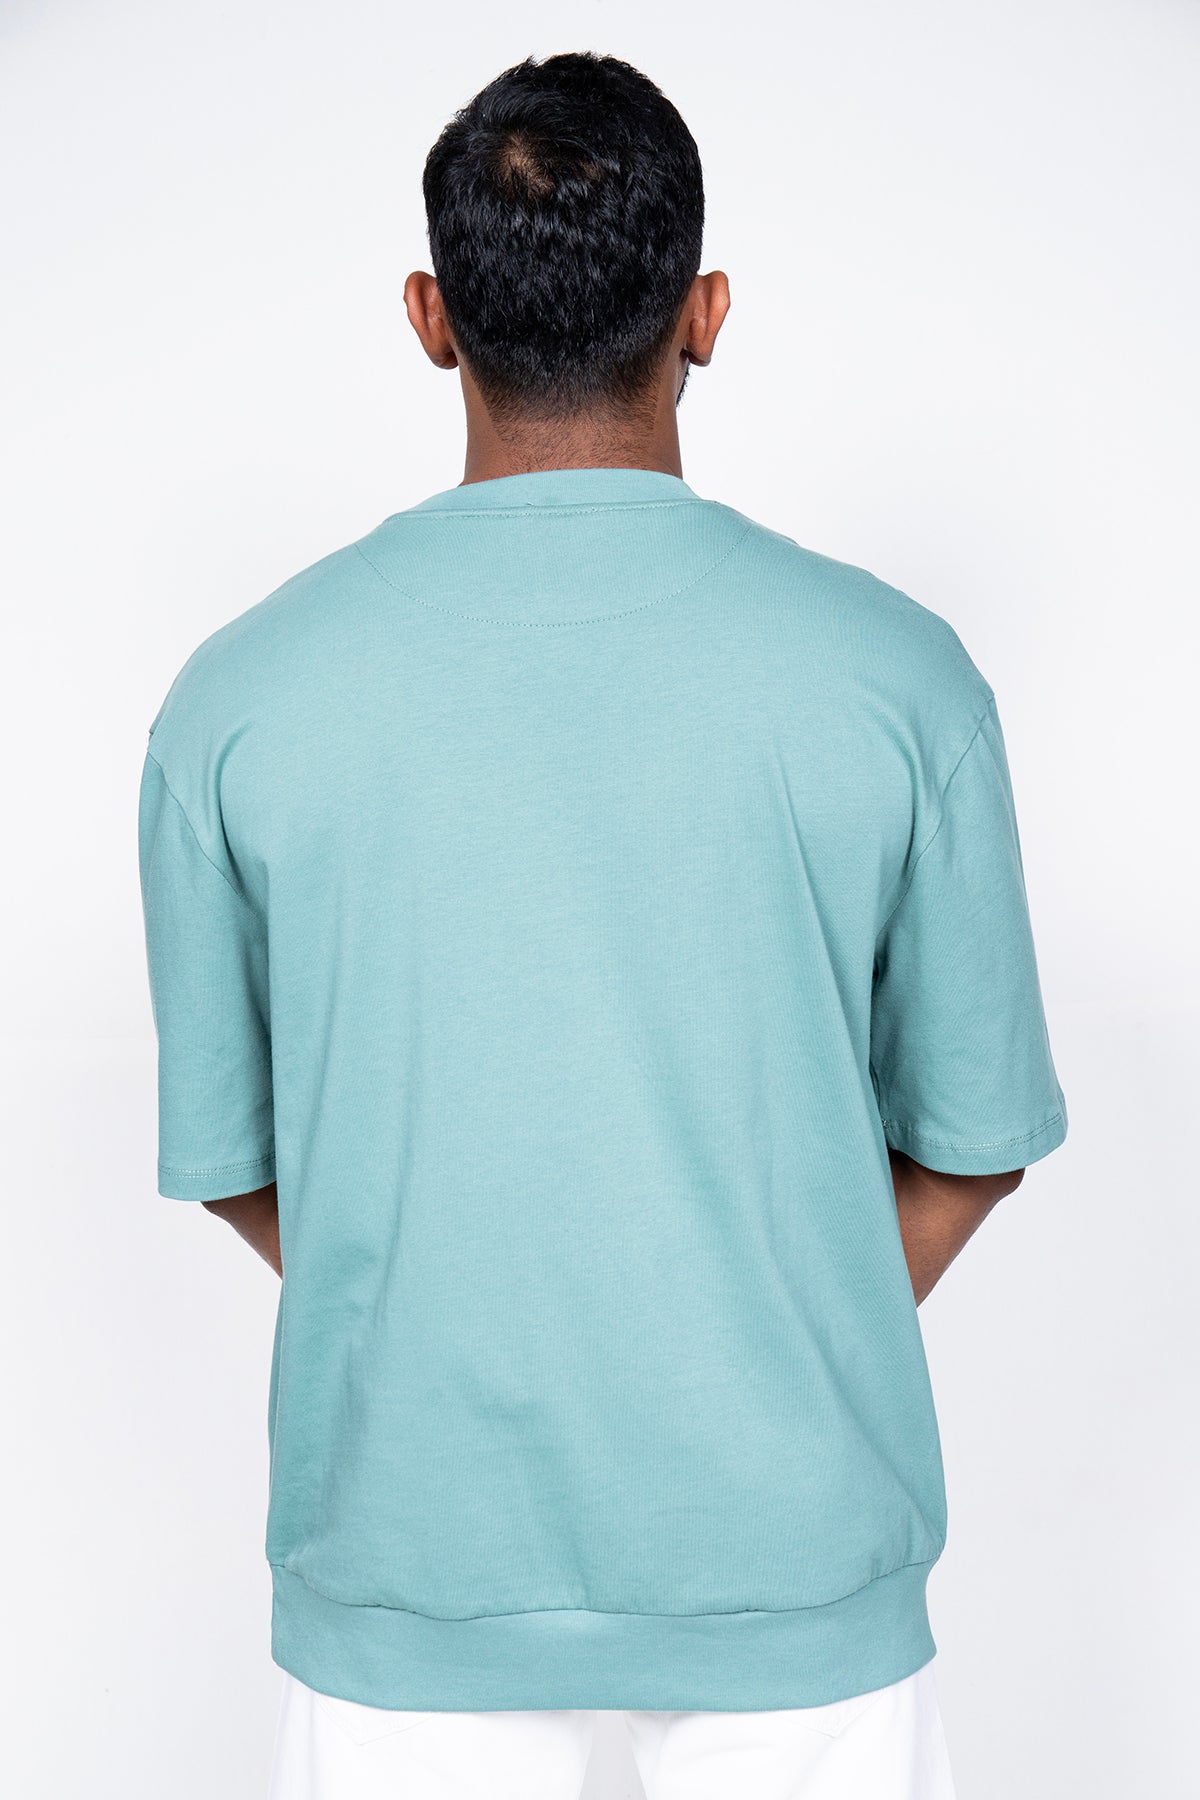 Hustle Men's Short Sleeve Over Size Casual T-Shirt